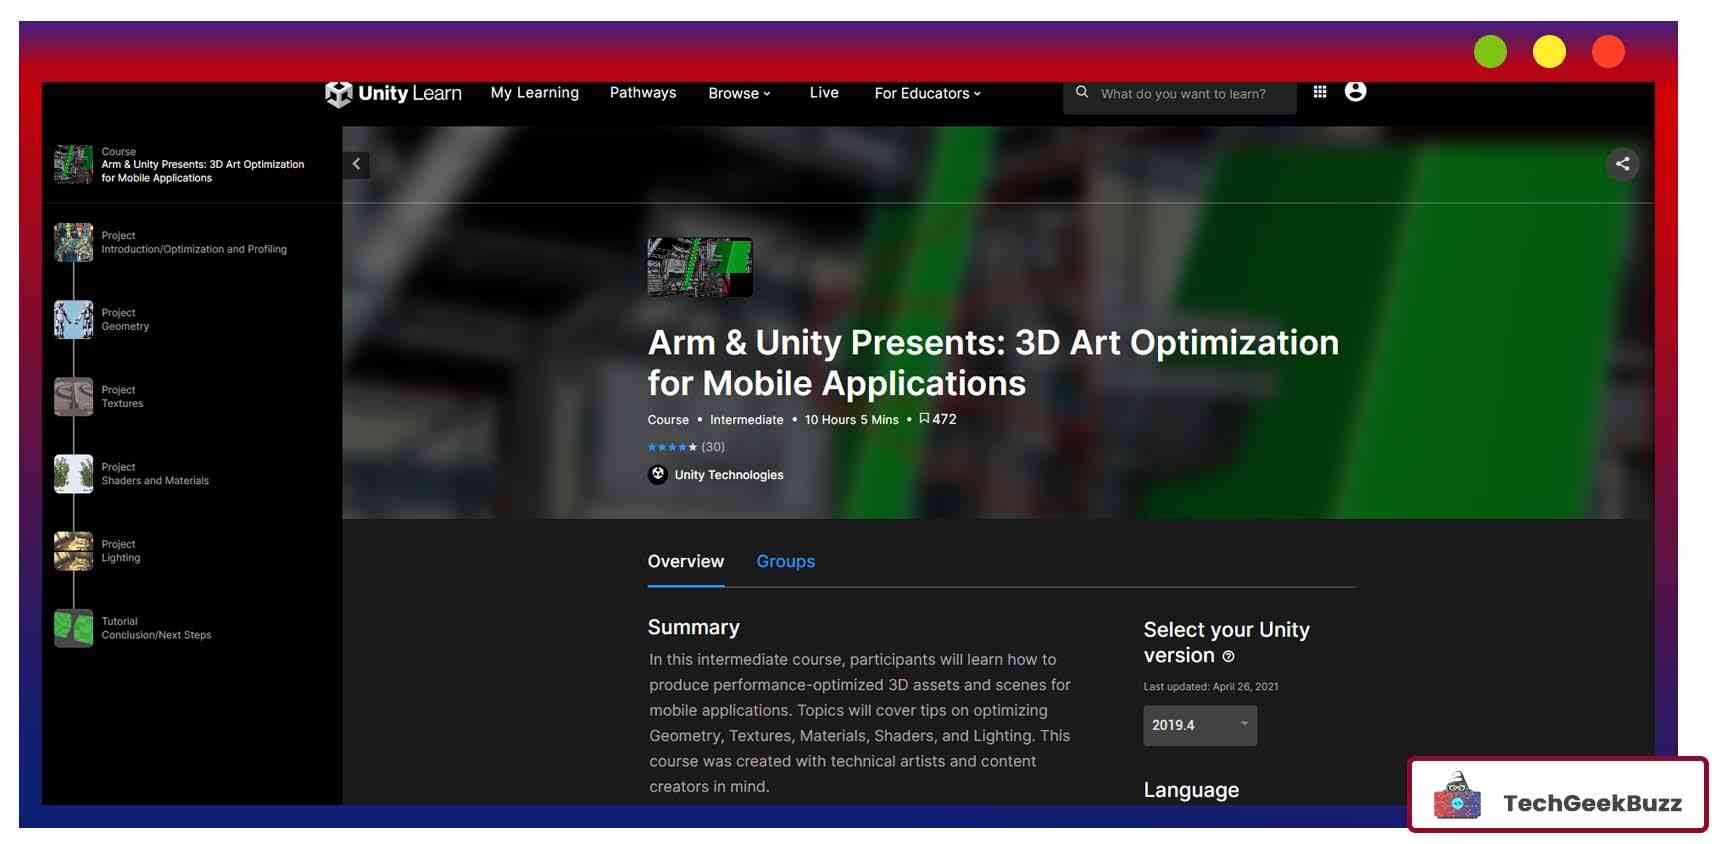 Arm & Unity Presents: 3D Art Optimization for Mobile Applications